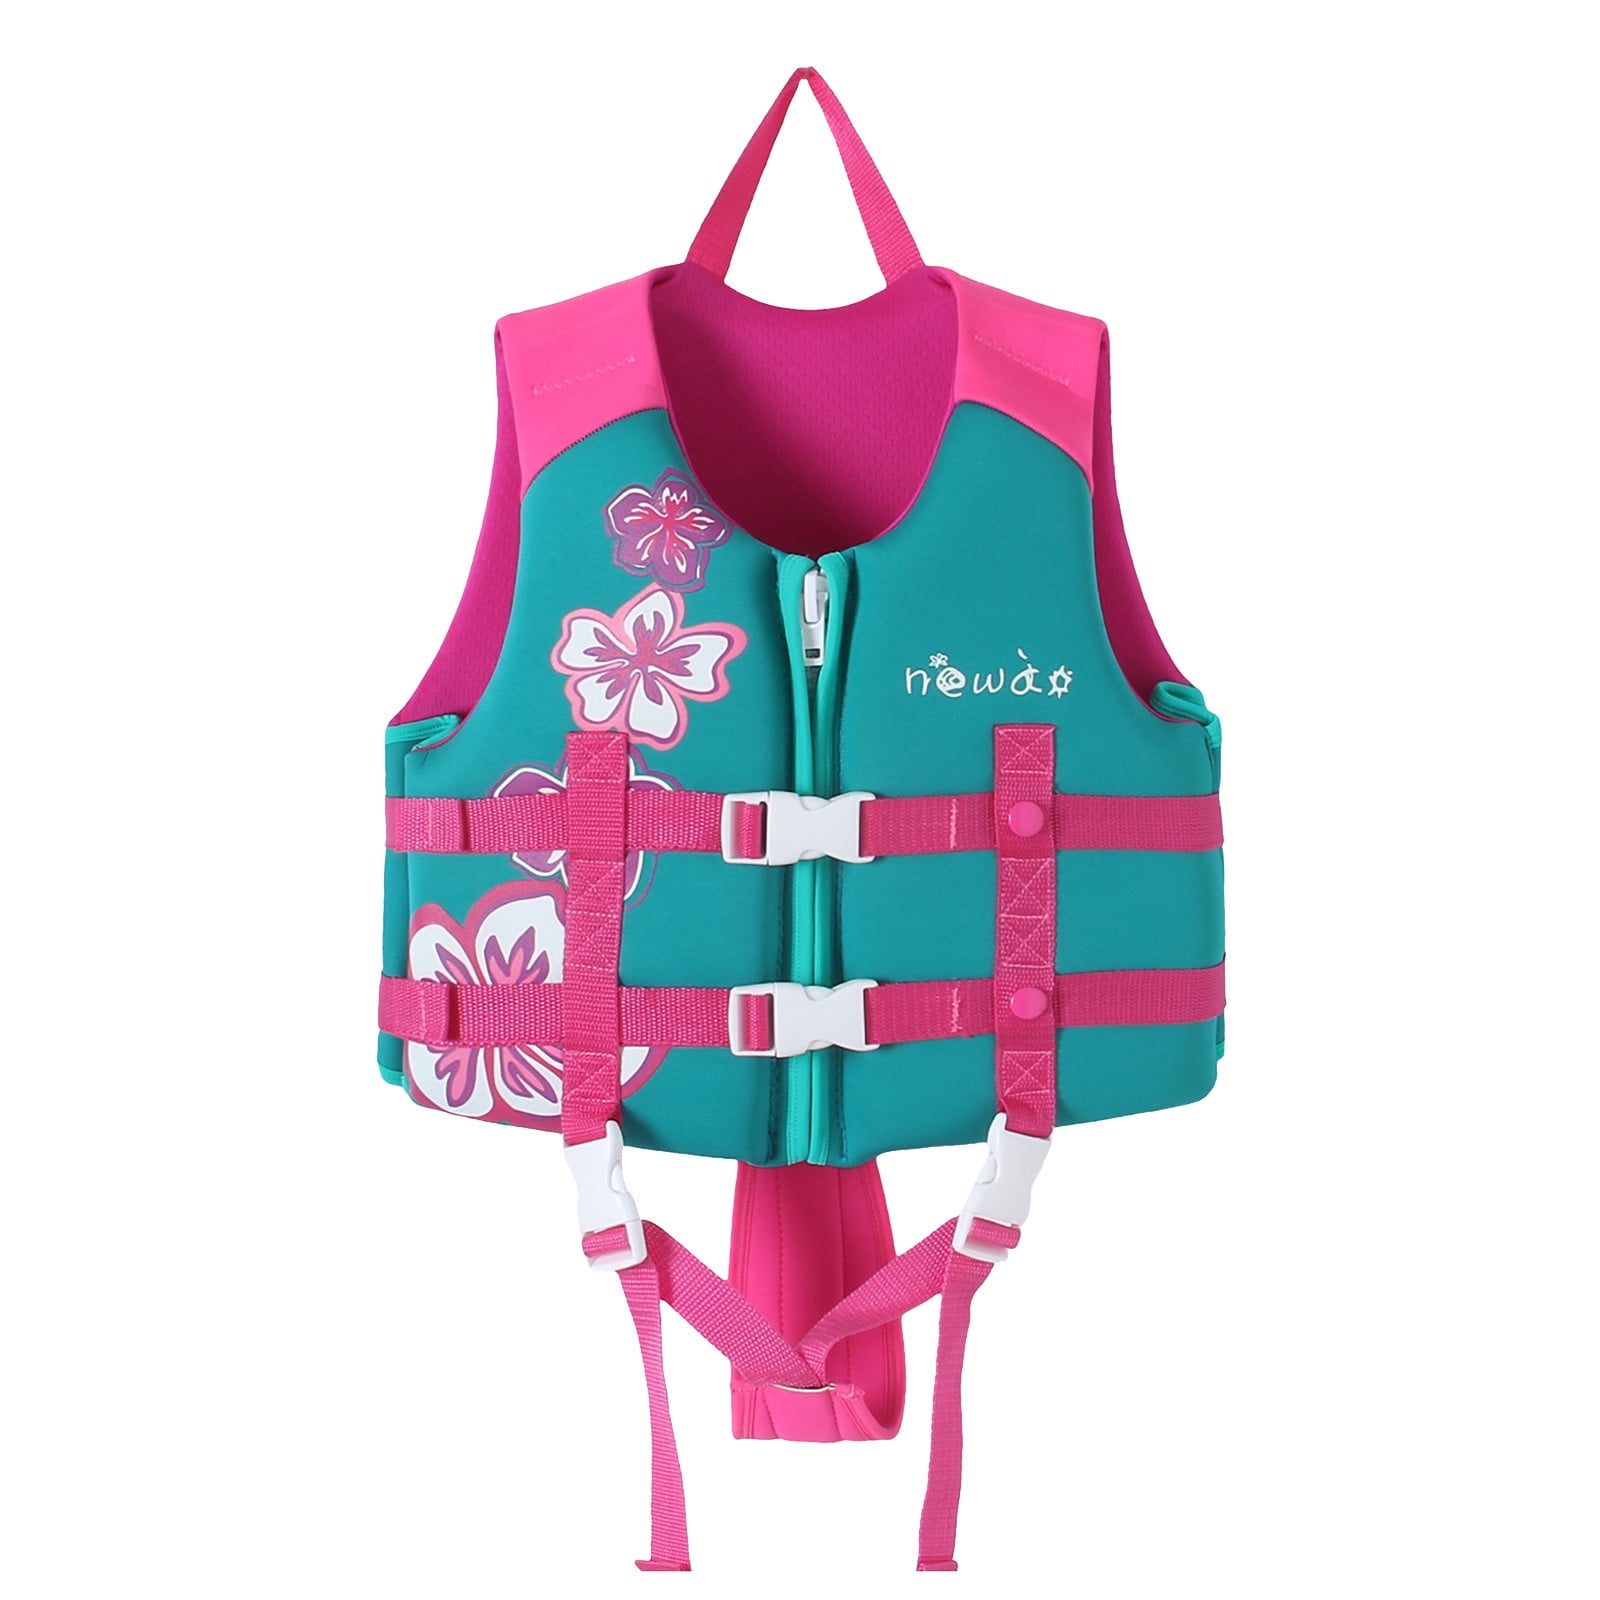 Details about   Kids Boys Girls Life Jacket Vest Swimming Floating Kayak Buoyancy Aid Watersport 